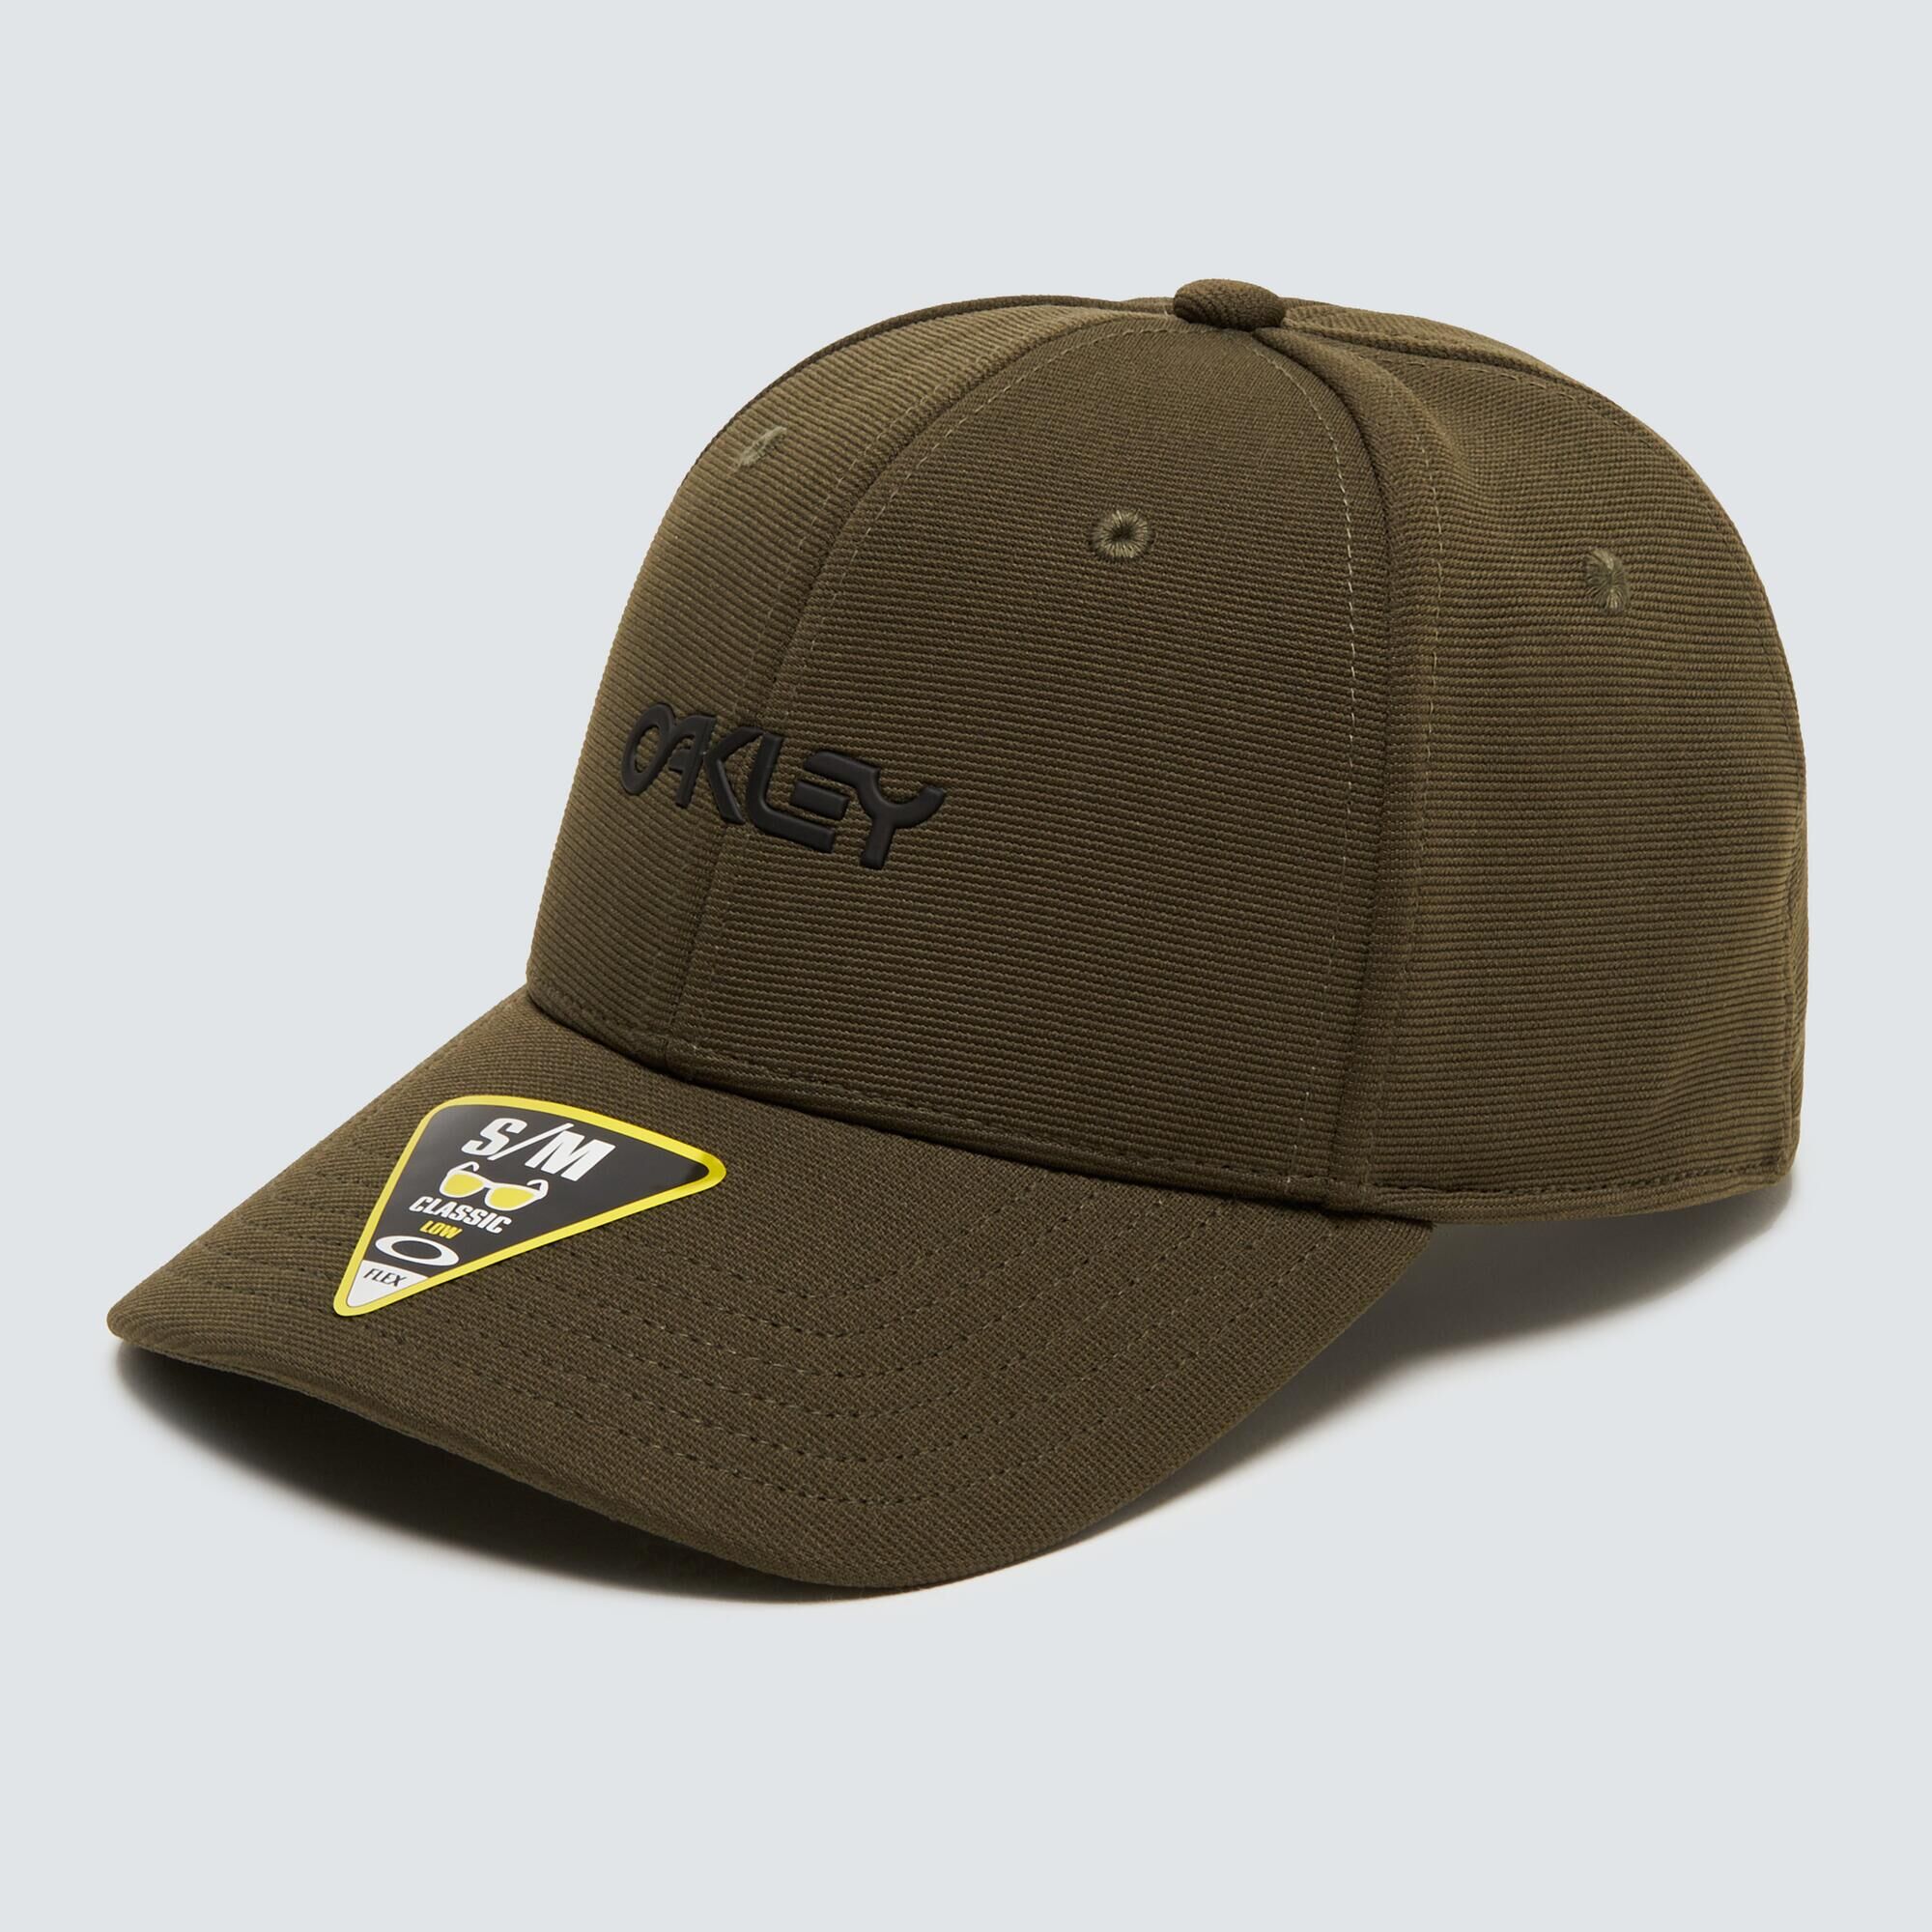 OAKLEY Oakley 6 PANEL STRETCH METALLIC HAT - NEW DARK BRUSH